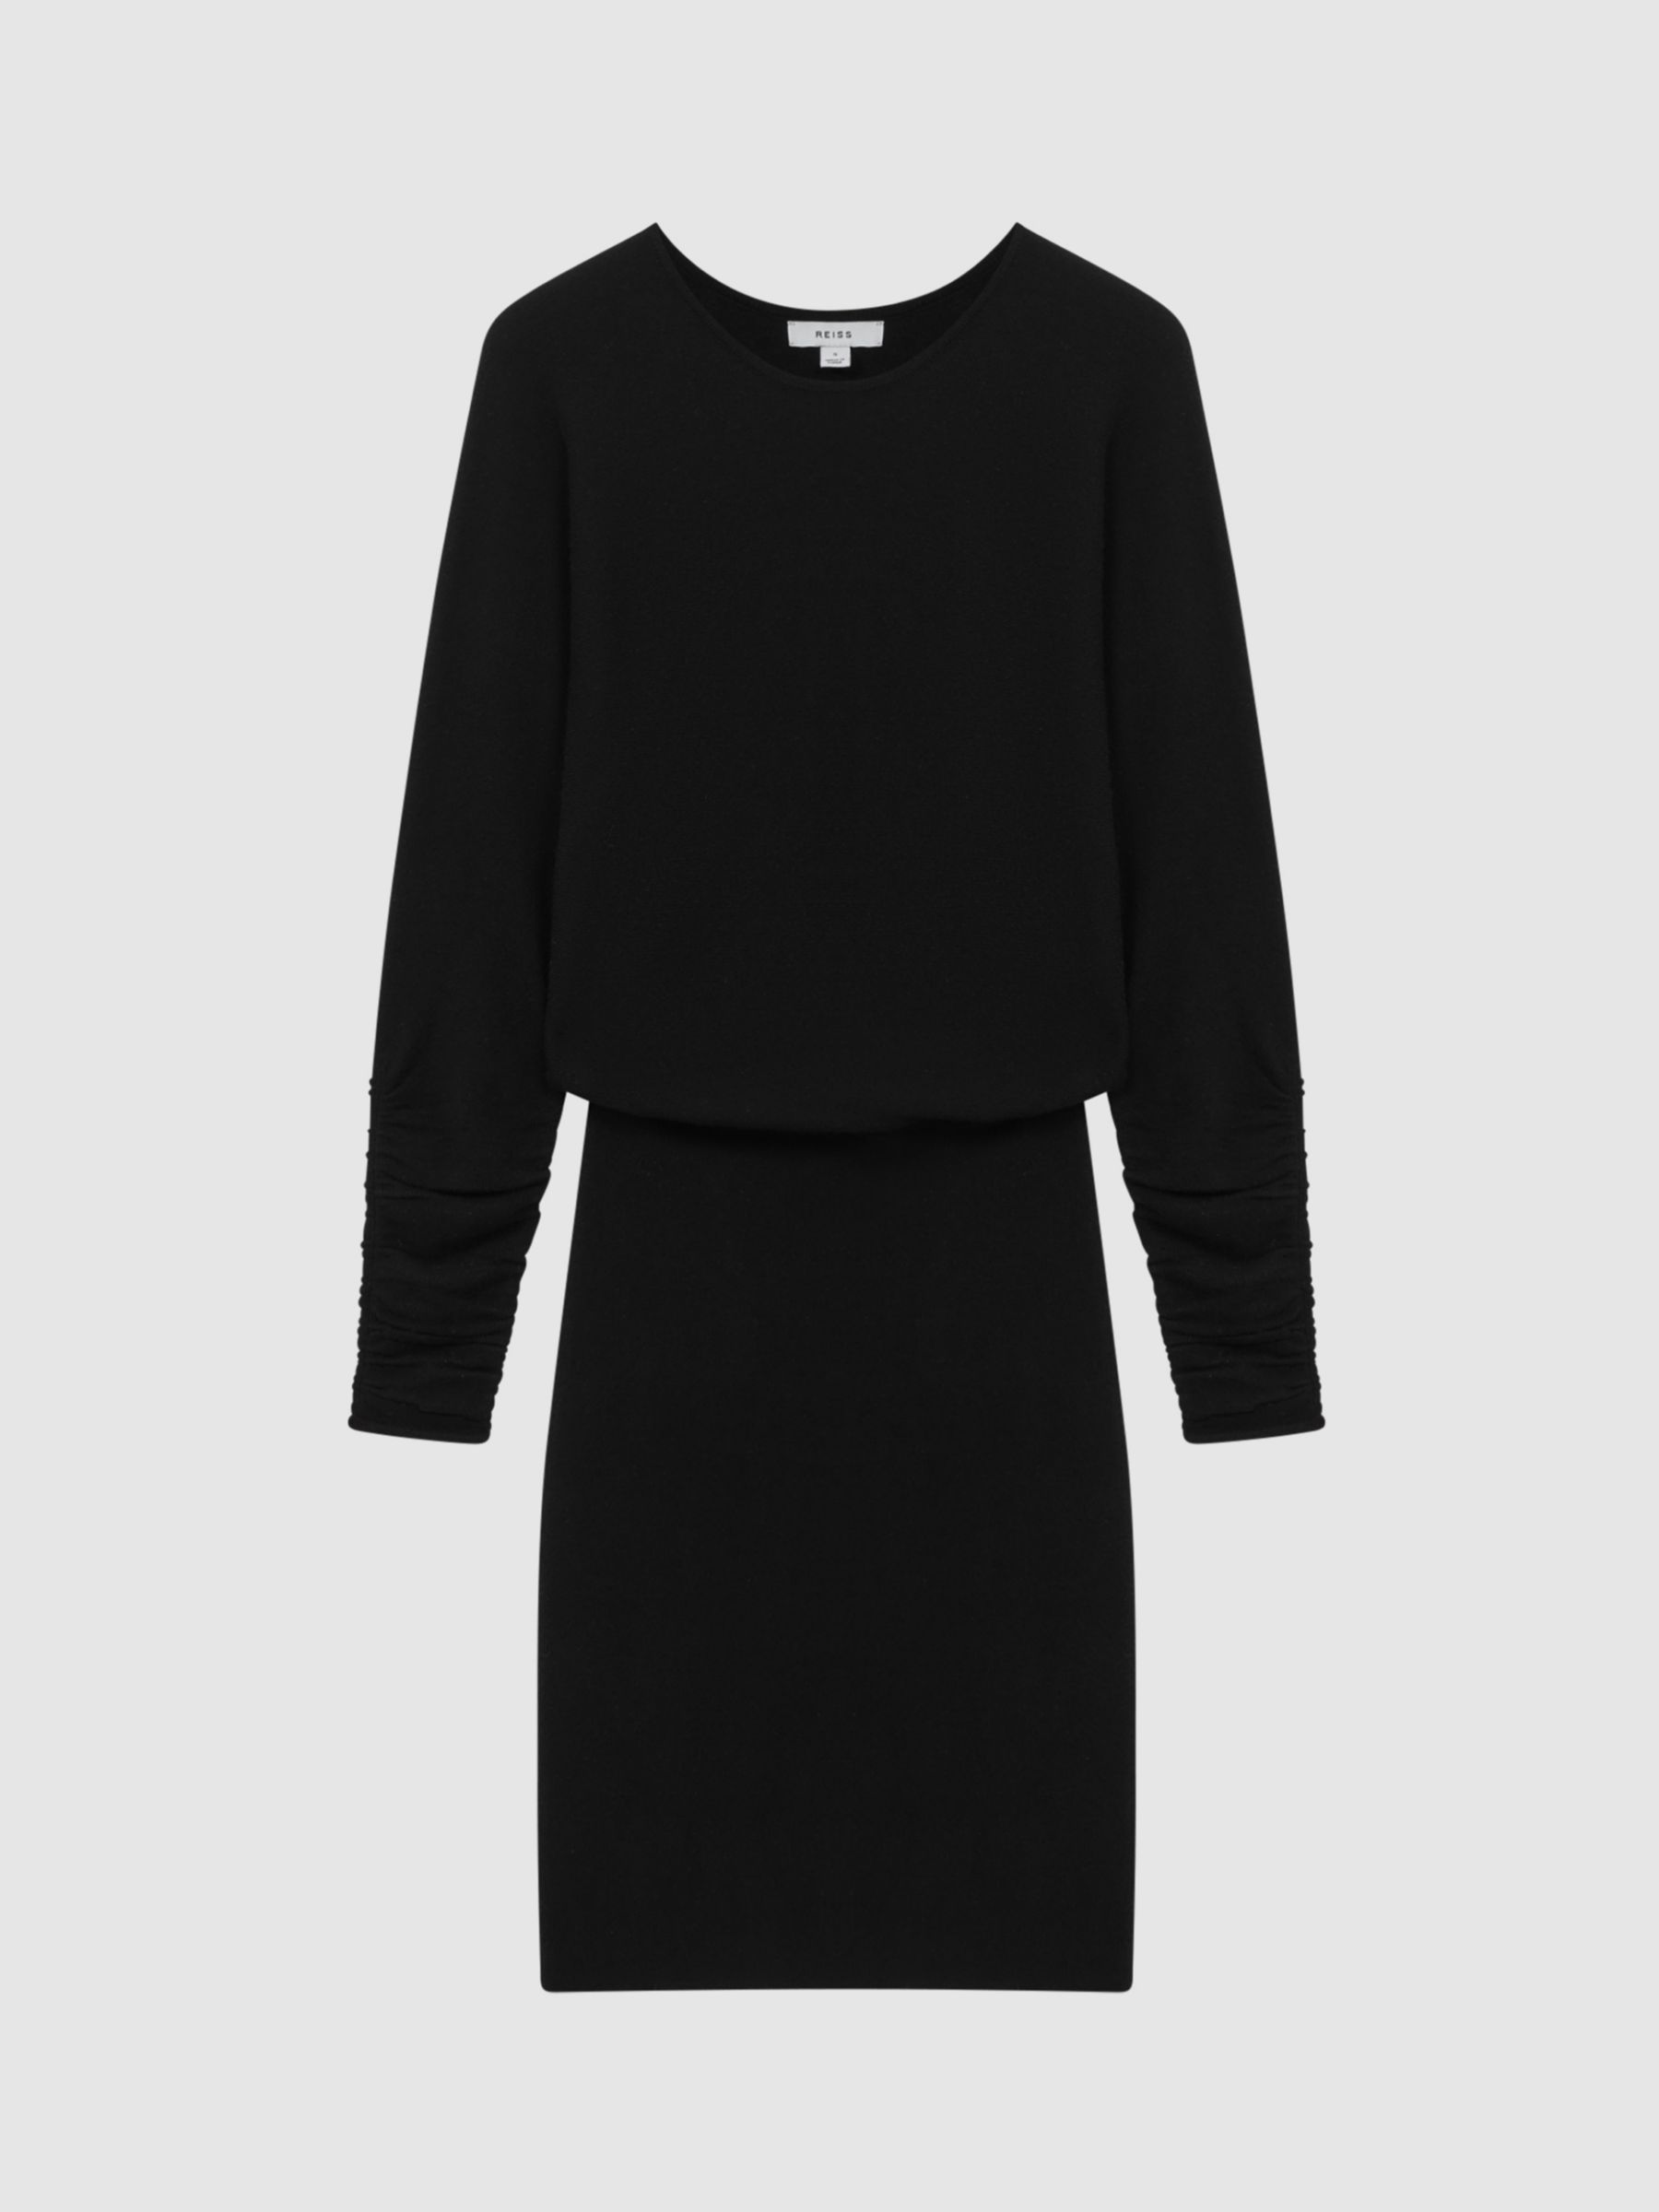 Reiss Lucy Wool Cashmere Blend Mini Dress, Black